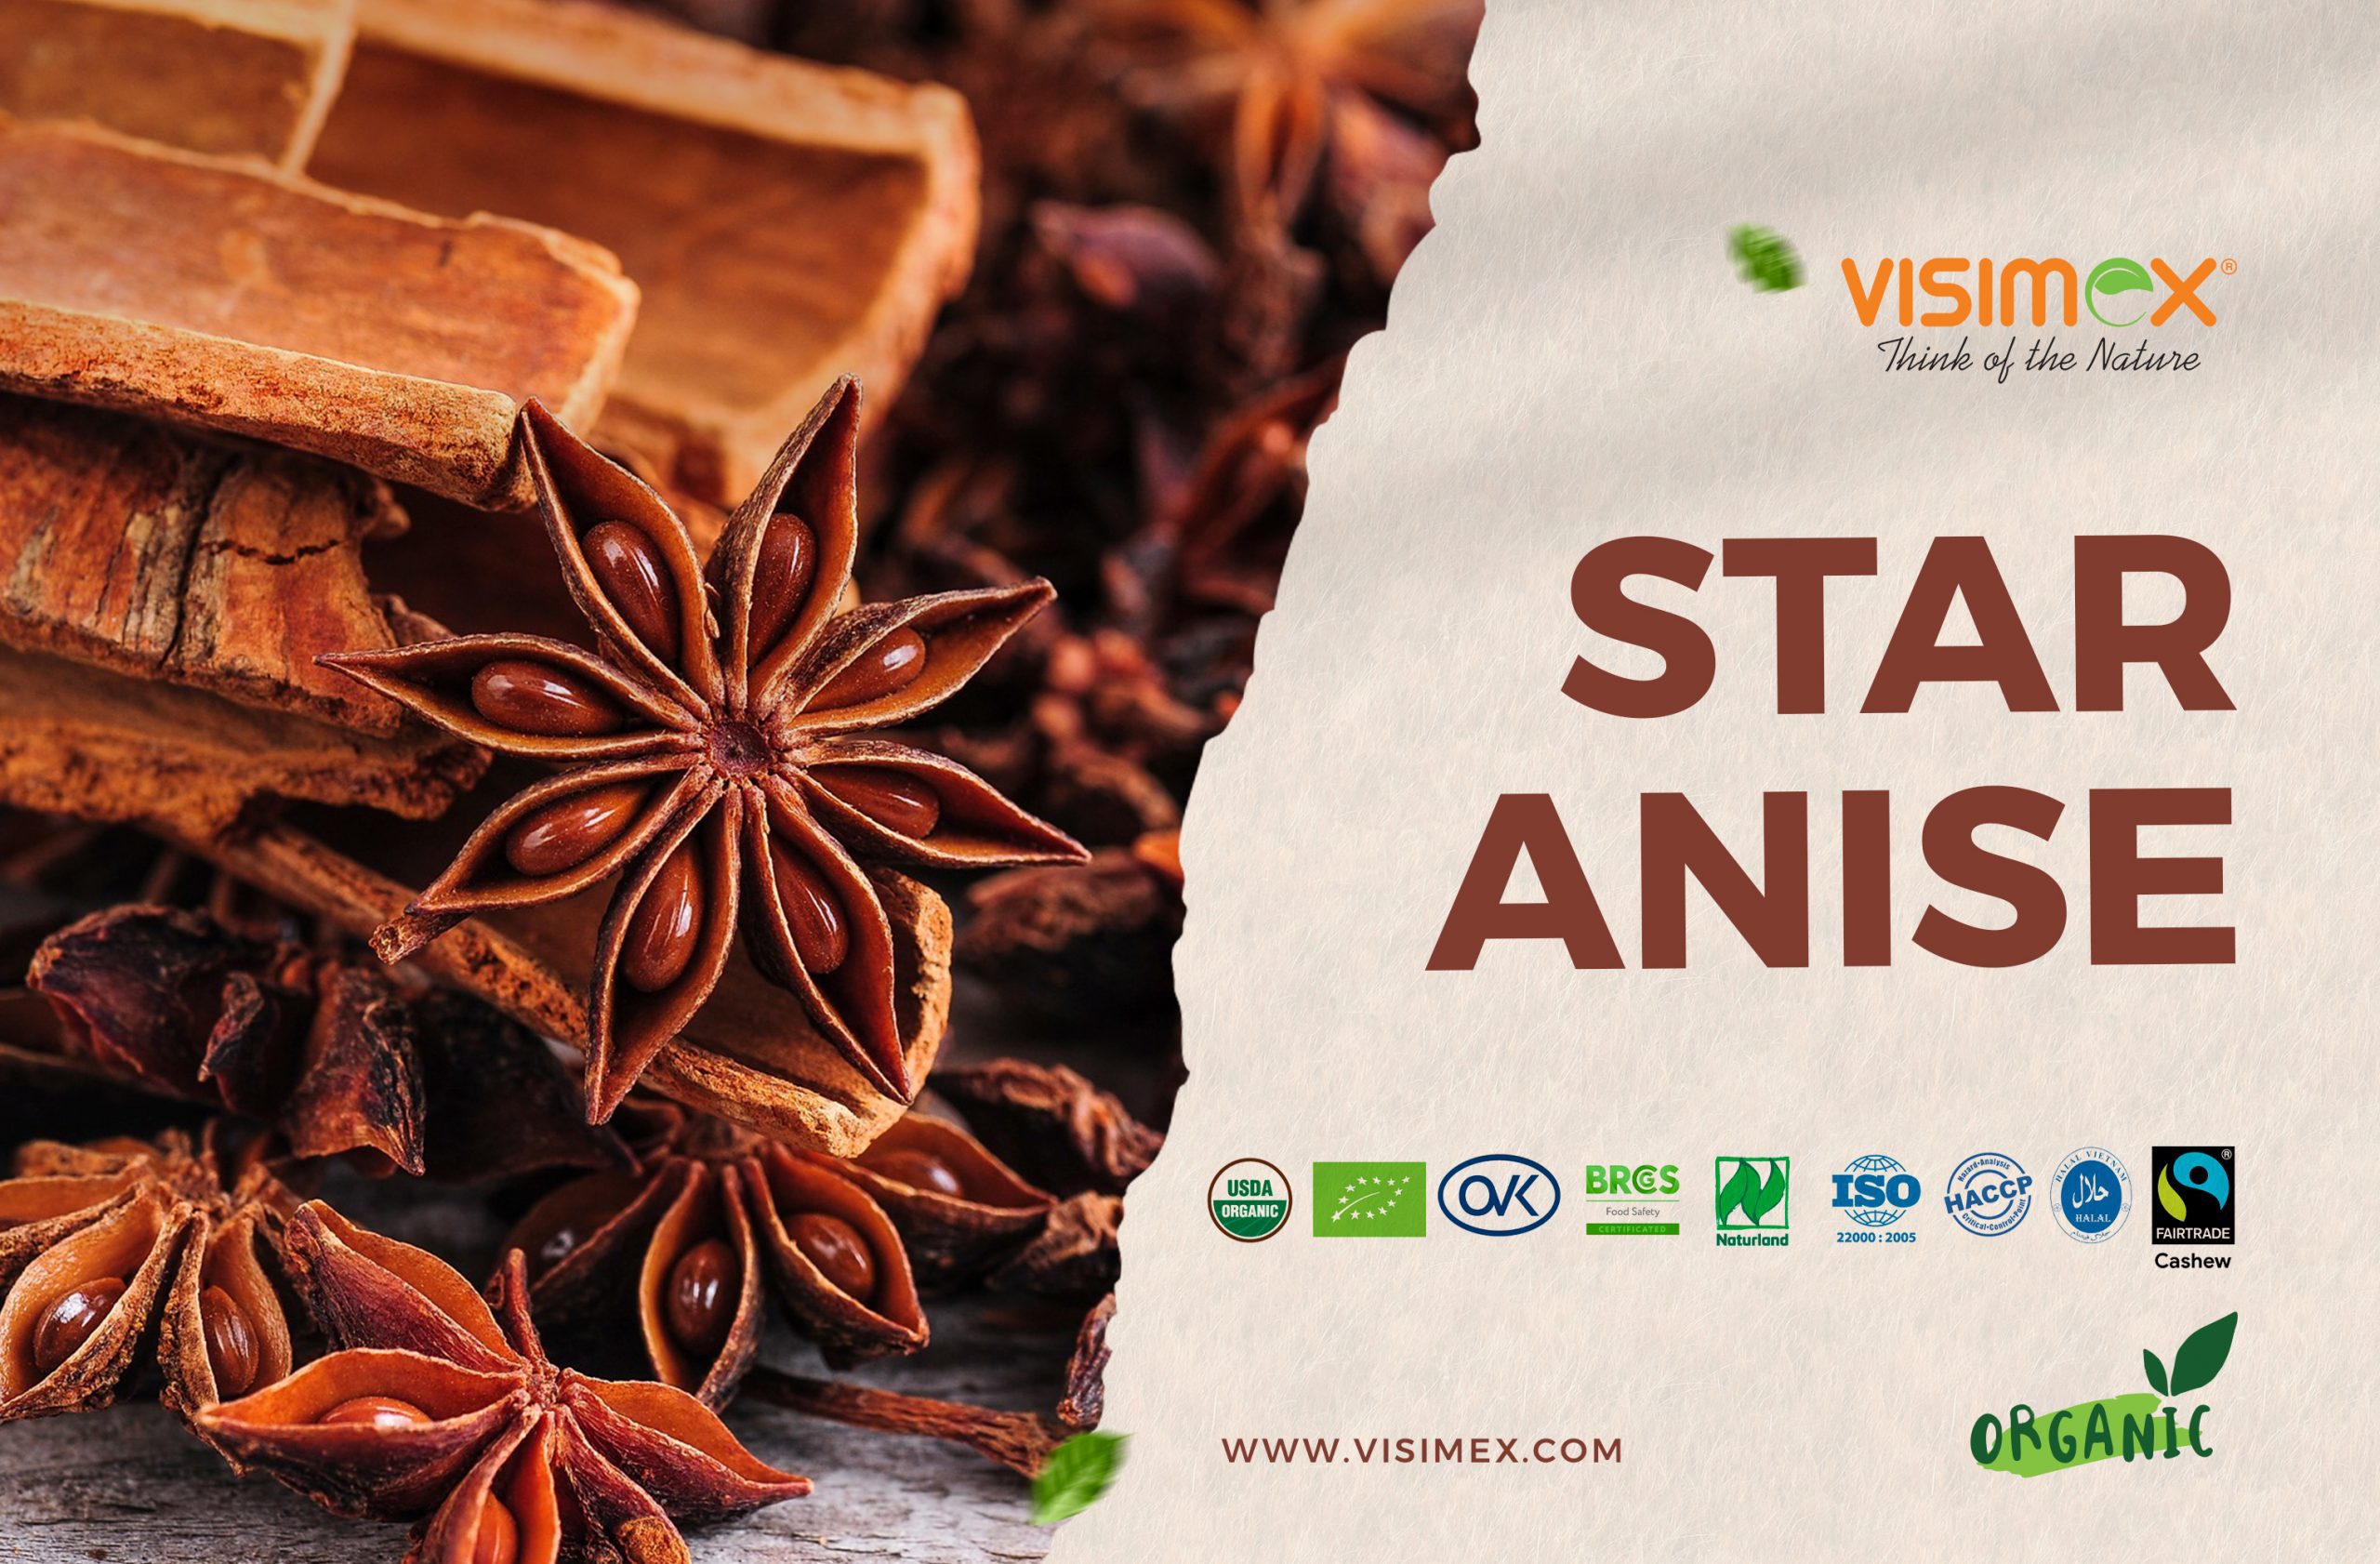 Organic Star Anise: A Health-Boosting Spice